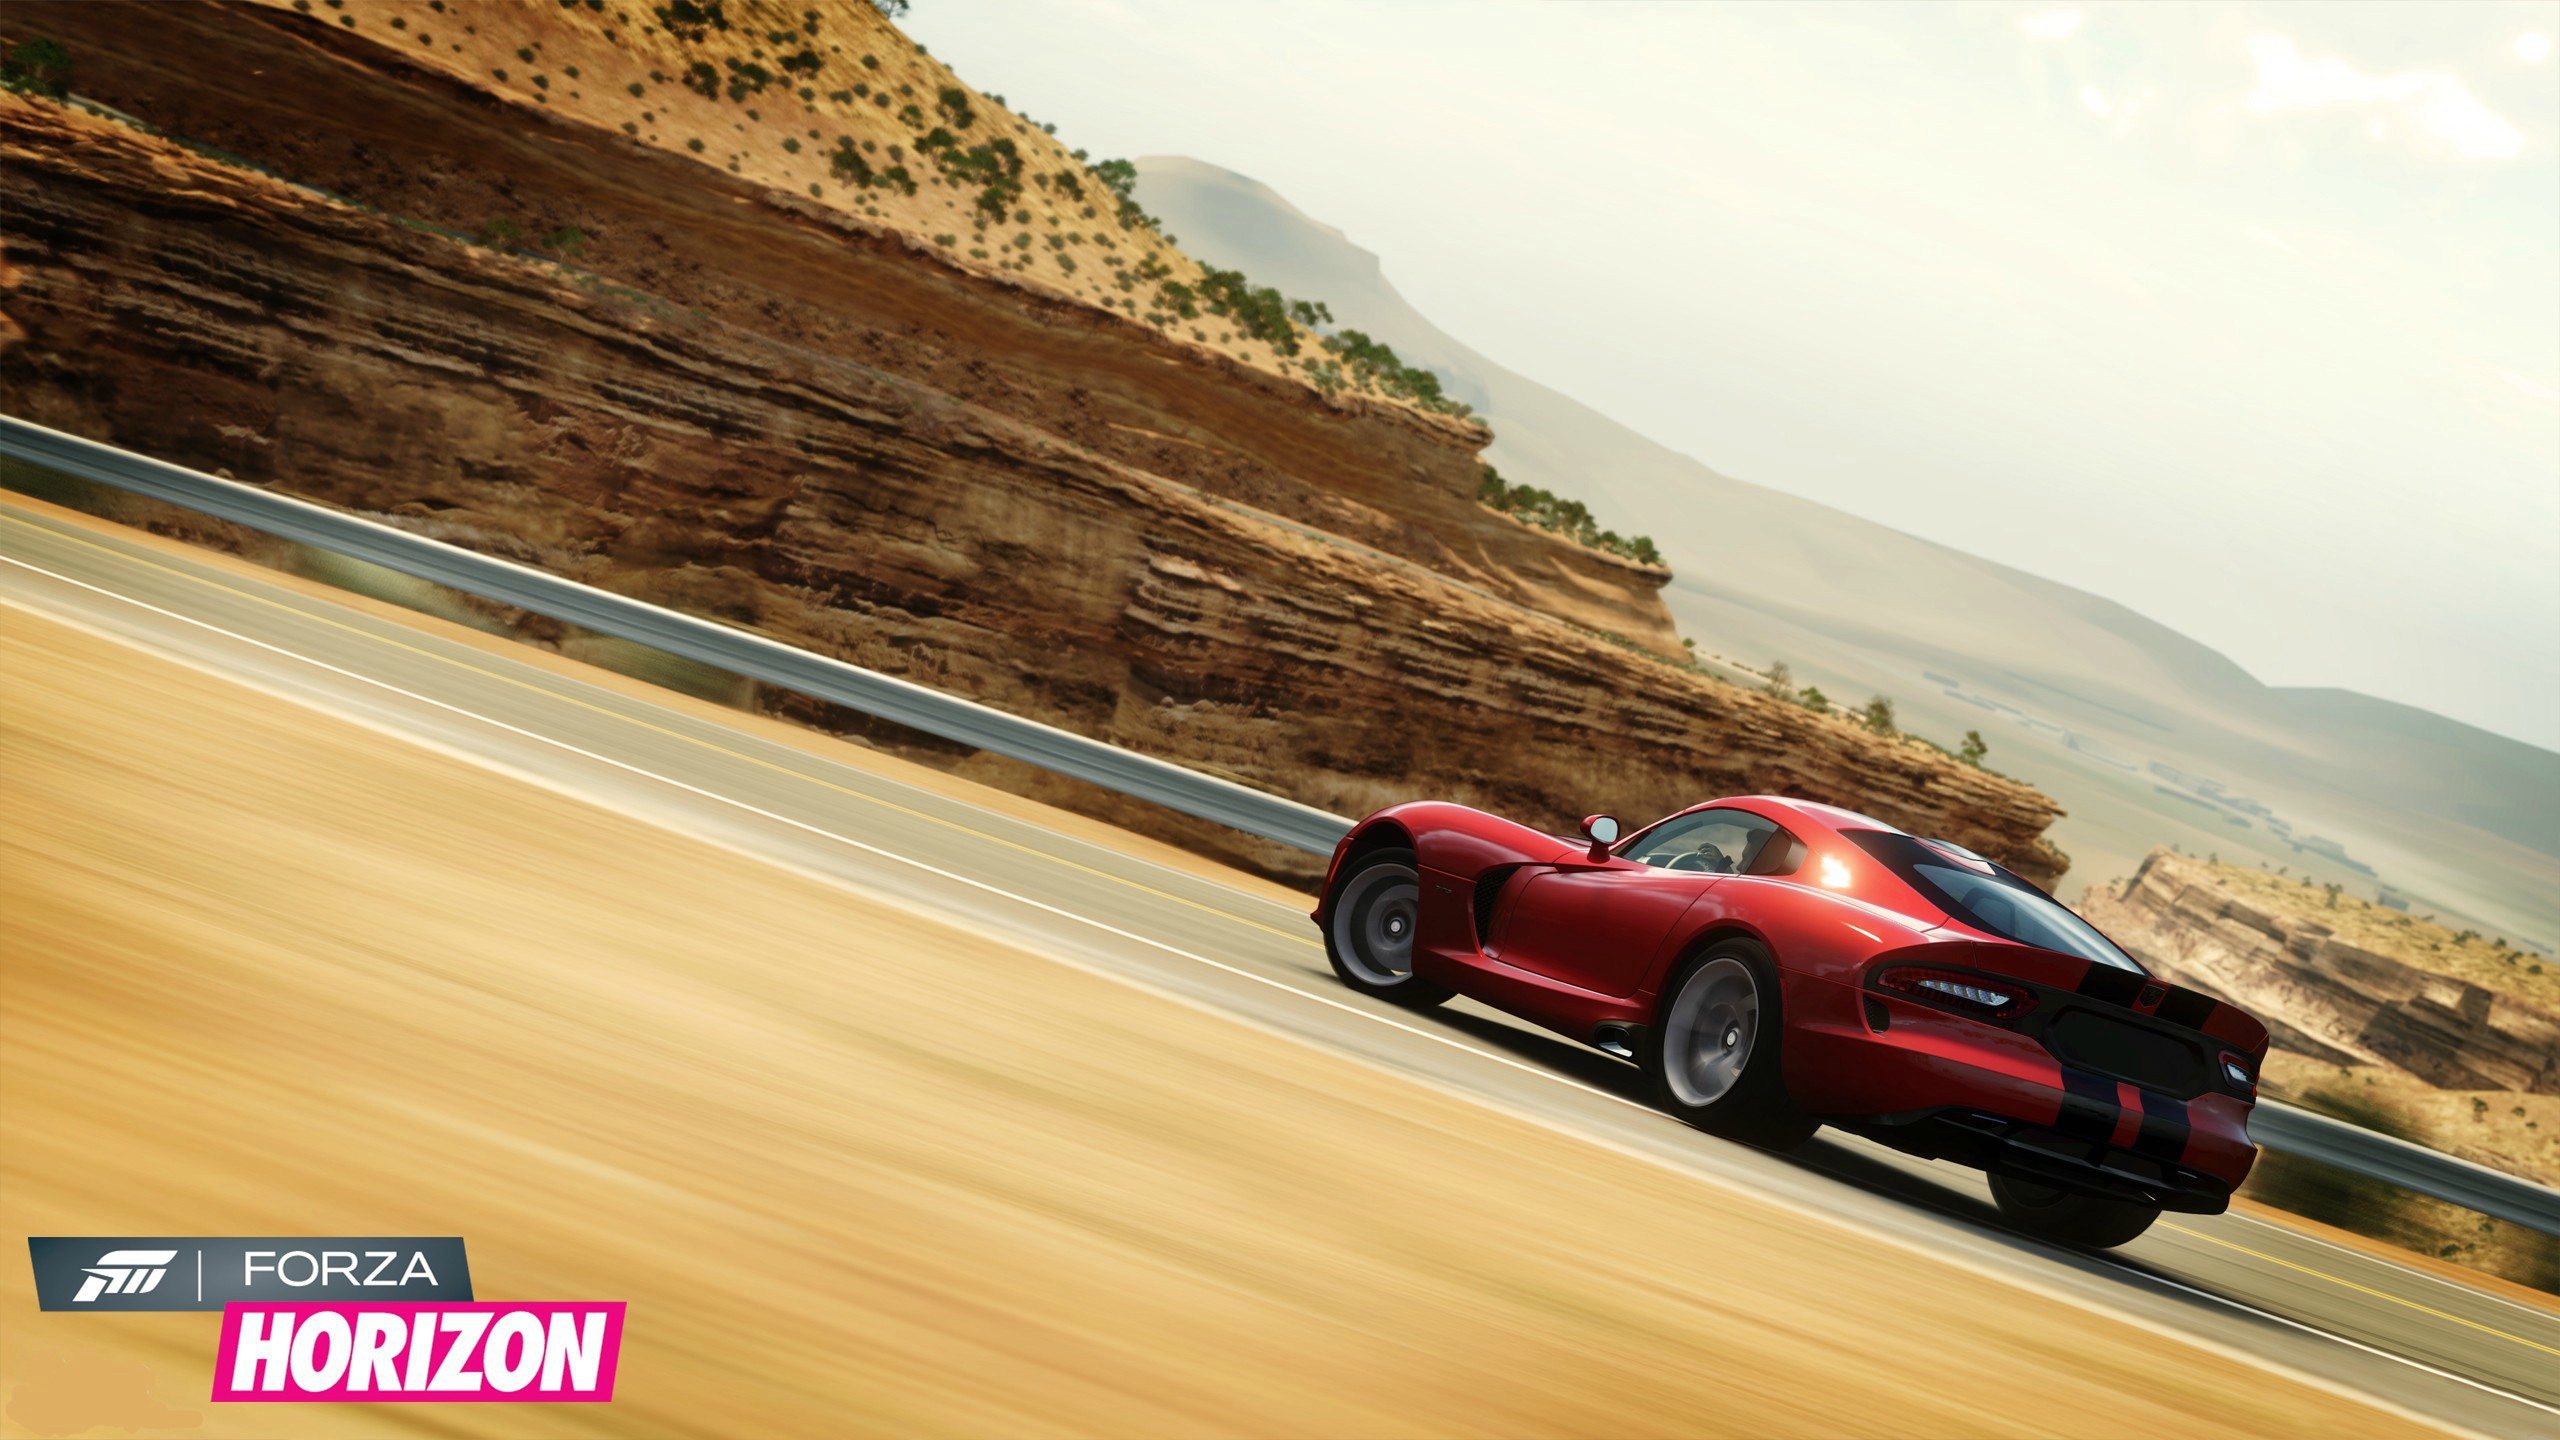 Forza Horizon 2 review